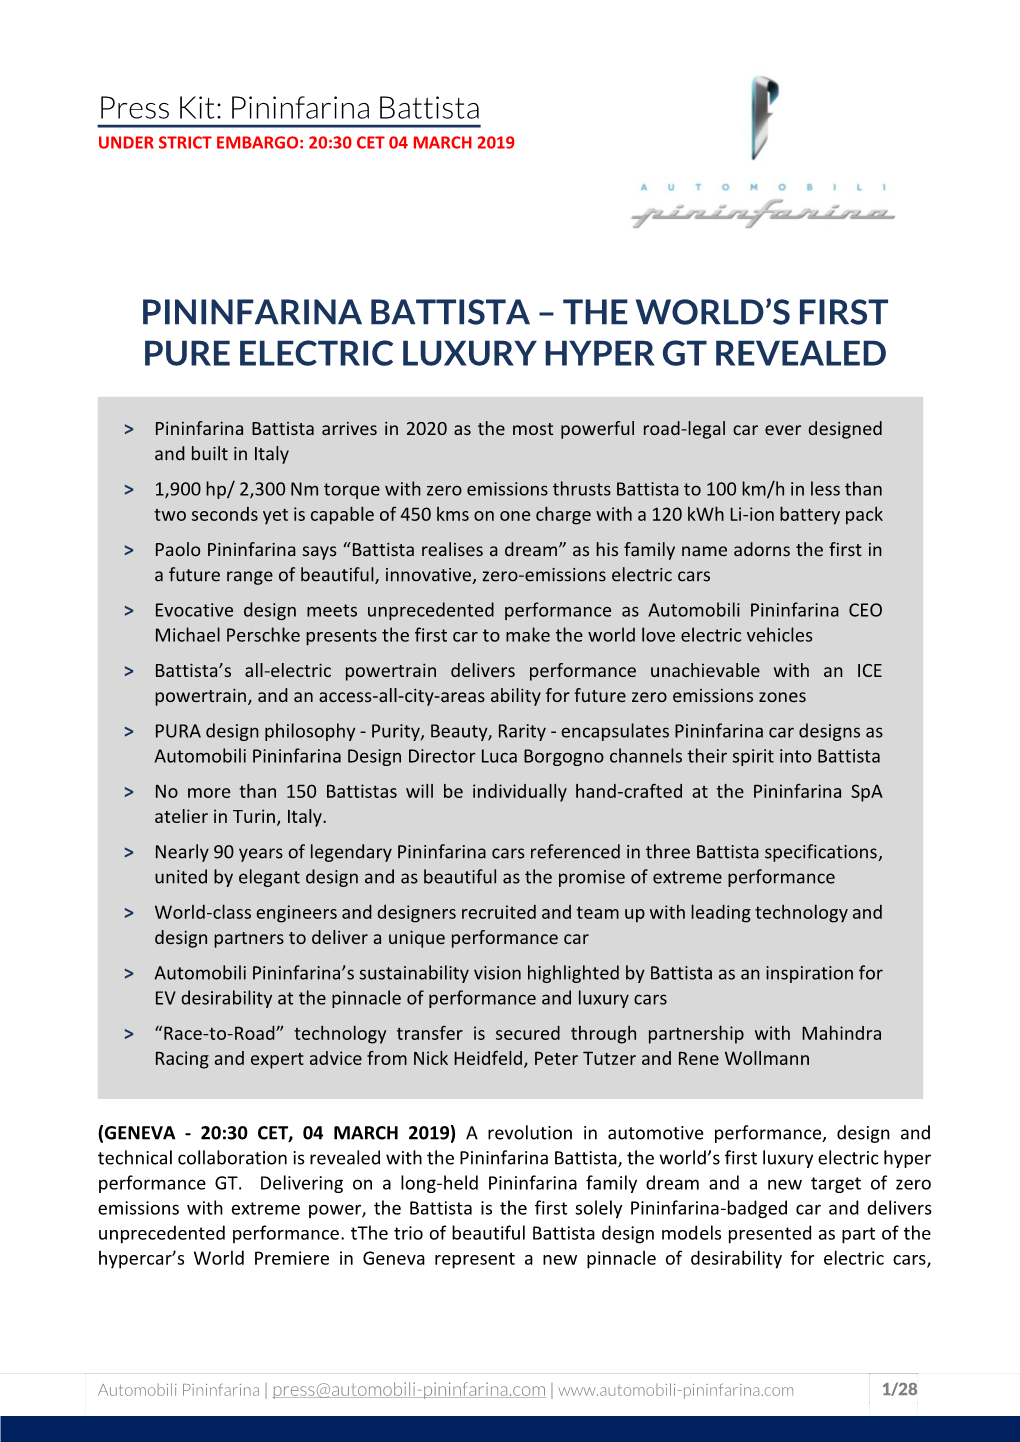 Pininfarina Battista – the World's